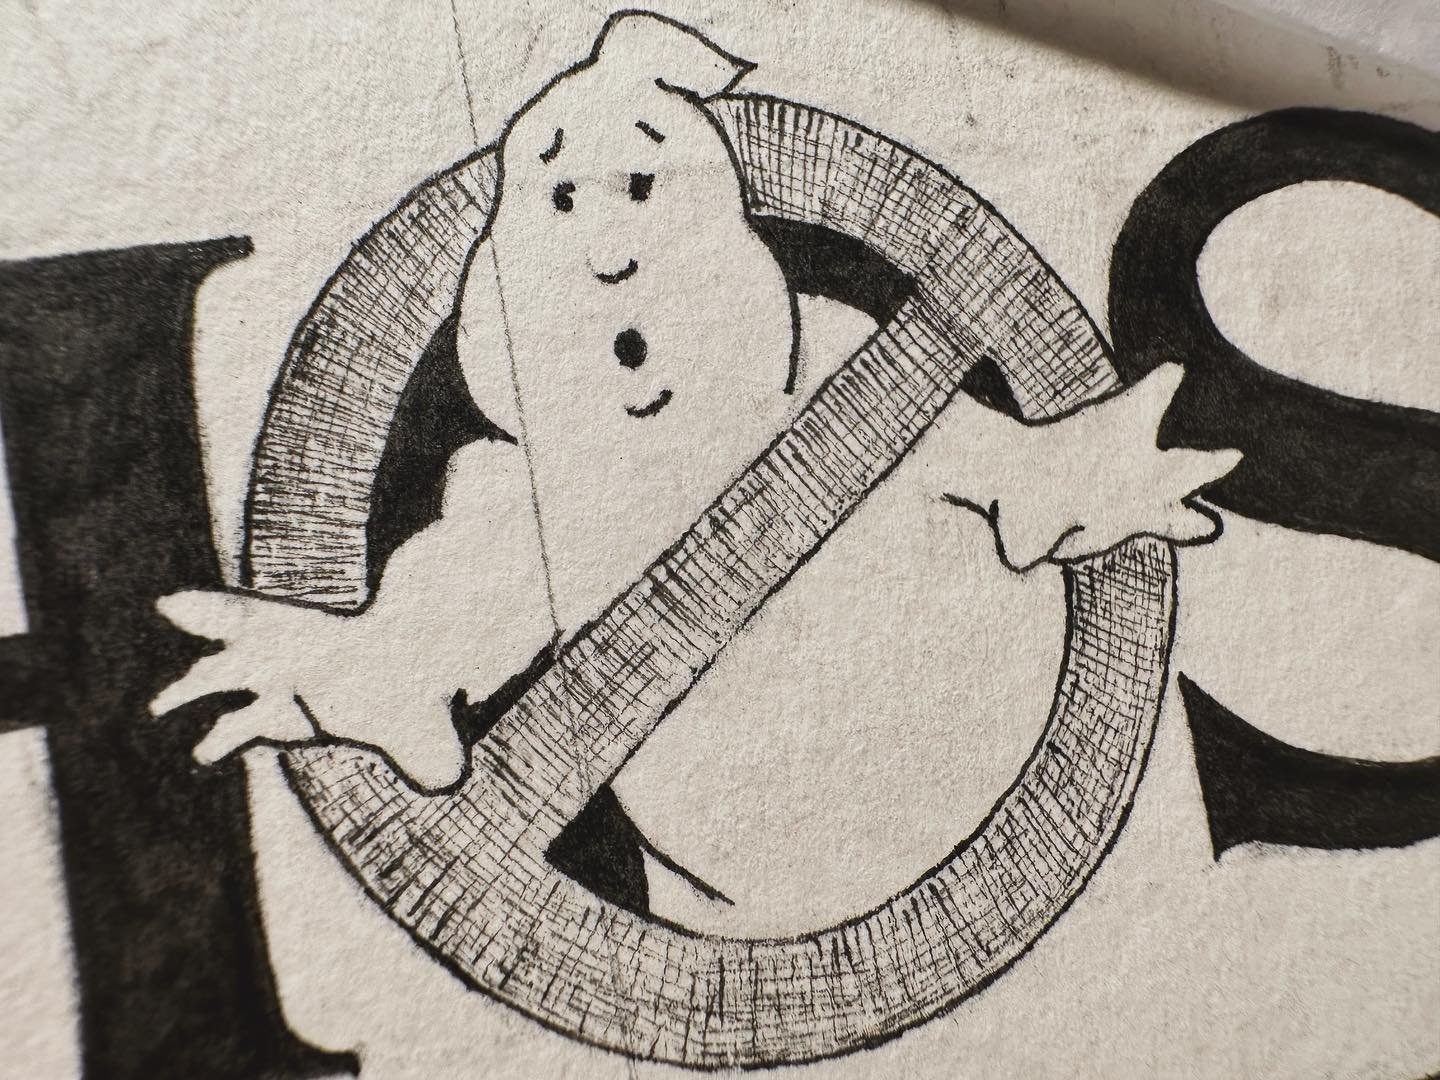 👻

#ghostbusters #ghostbusters1984 #cultclassic #illustrationart #inkdrawing